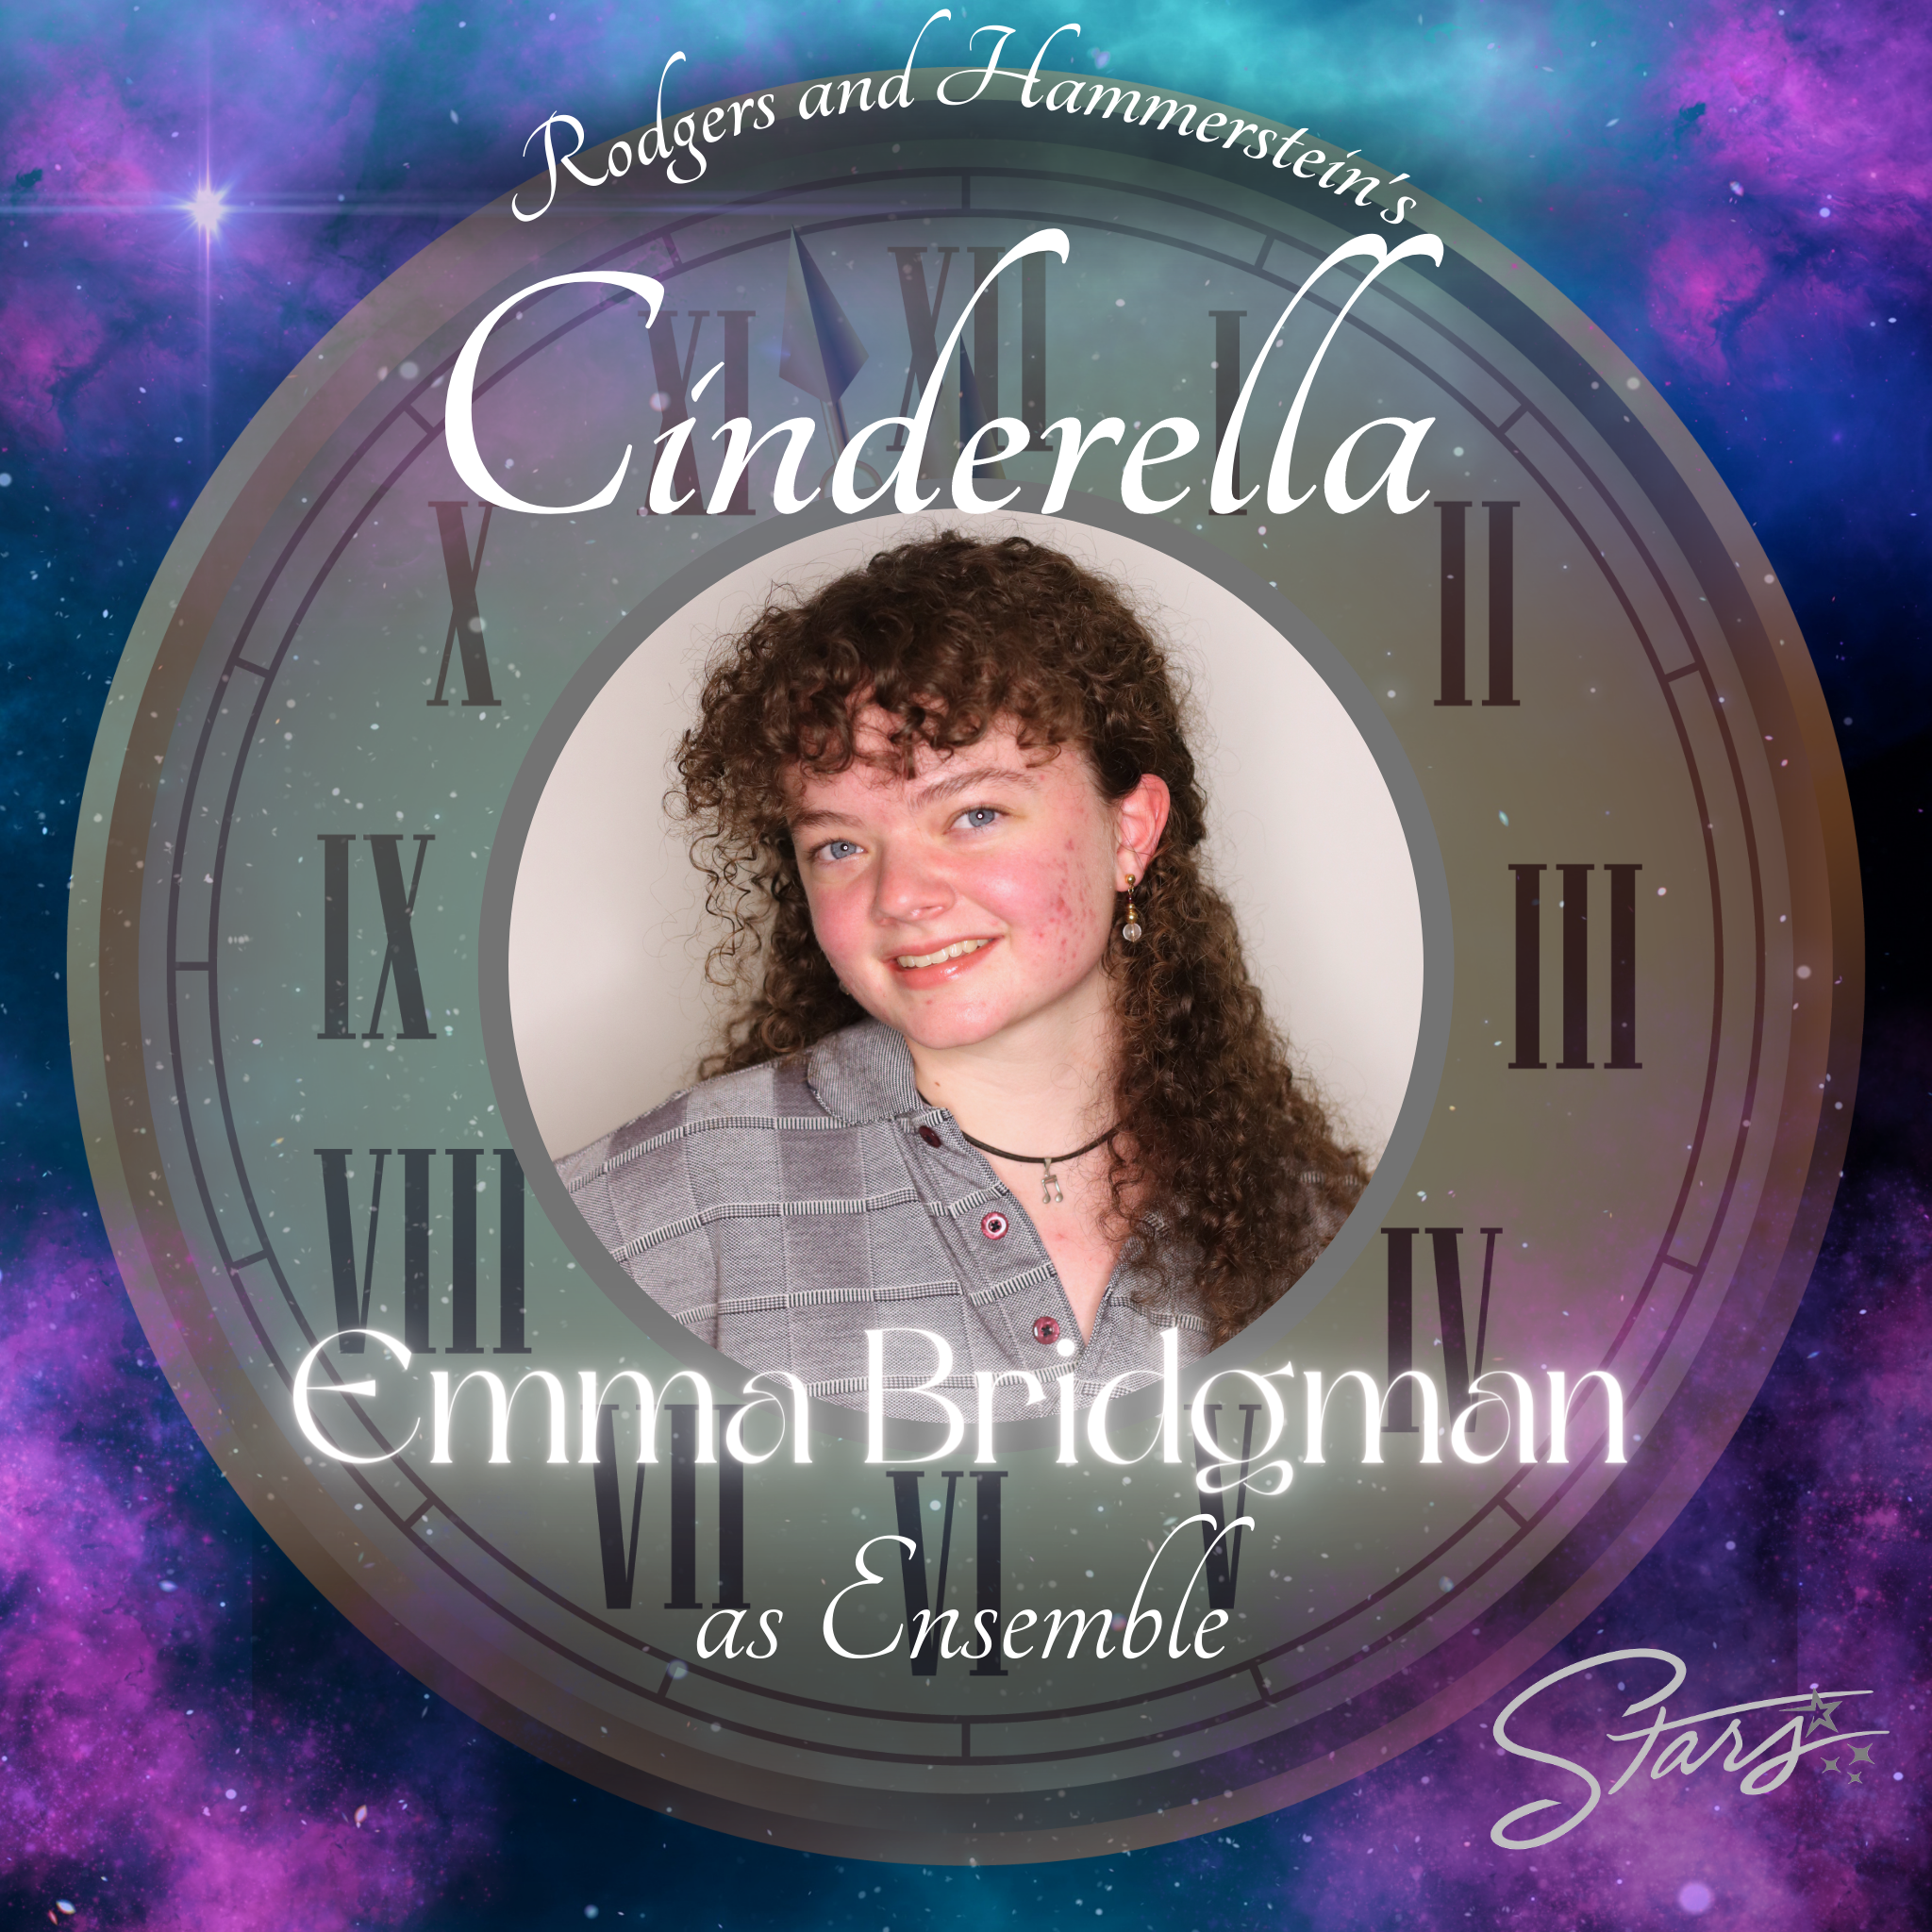 Emma Bridgman as Ensemble in Cinderella